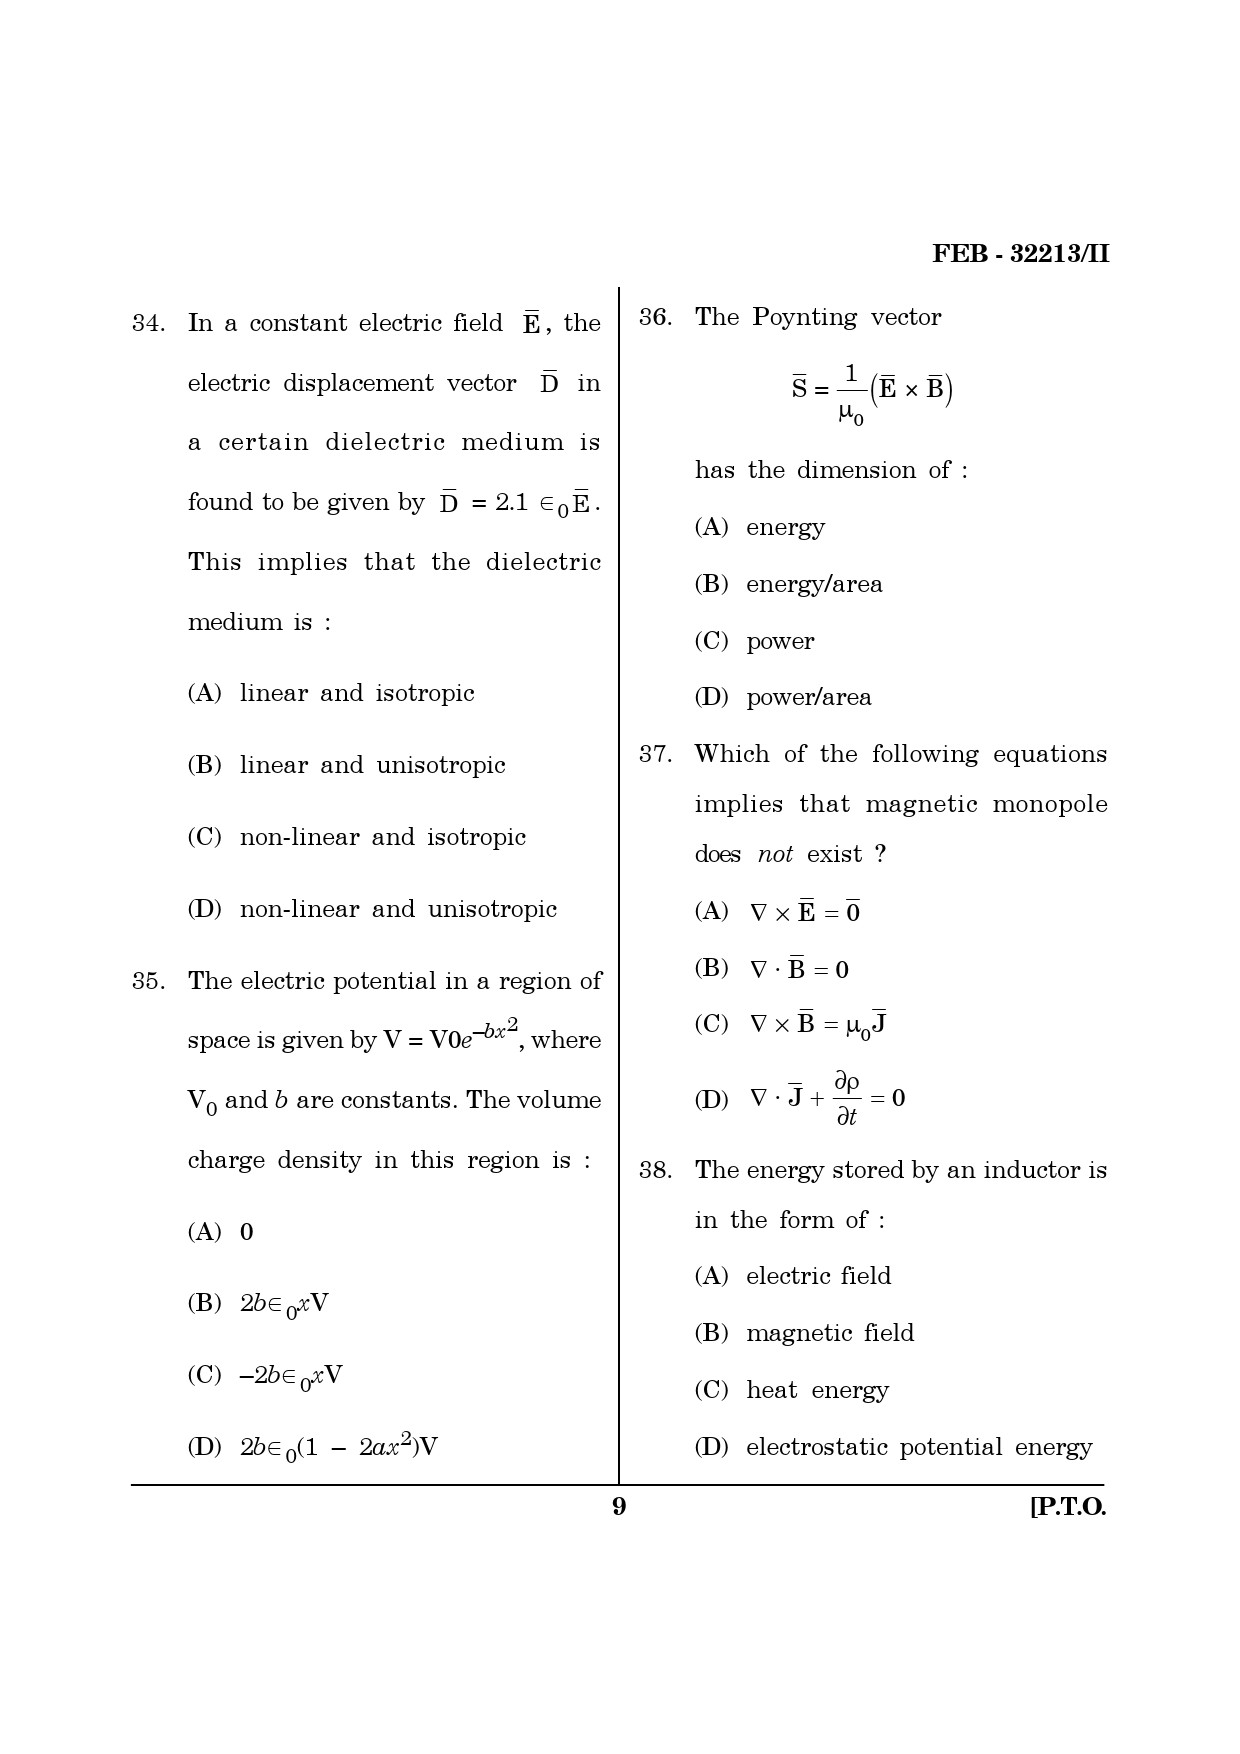 Maharashtra SET Physics Question Paper II February 2013 9